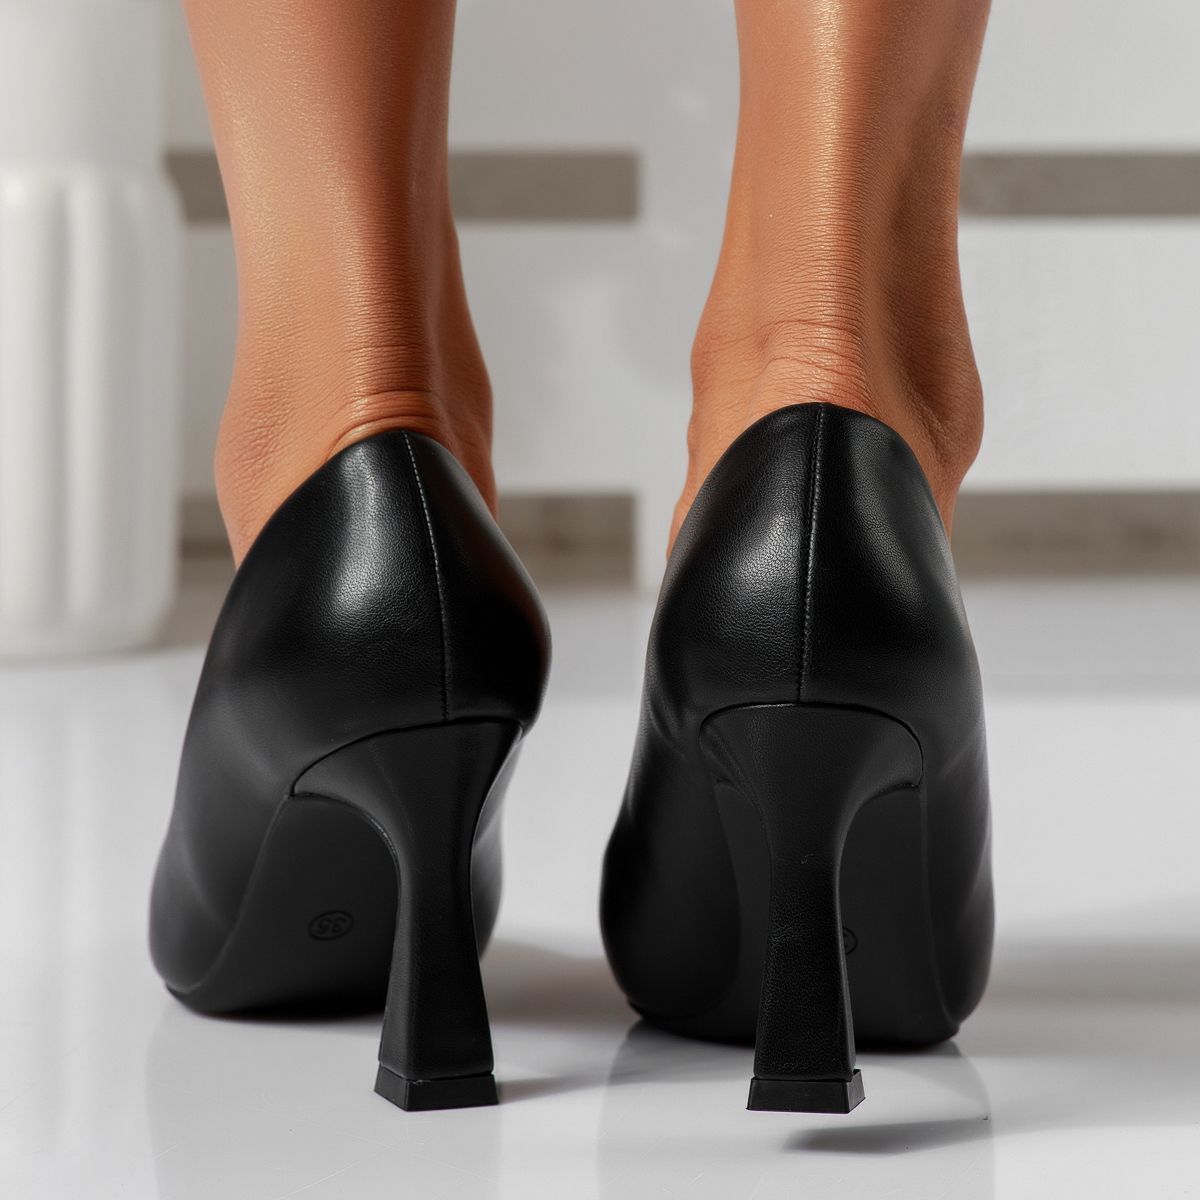 Pantofi Dama cu Toc Siena2 Negri #16657